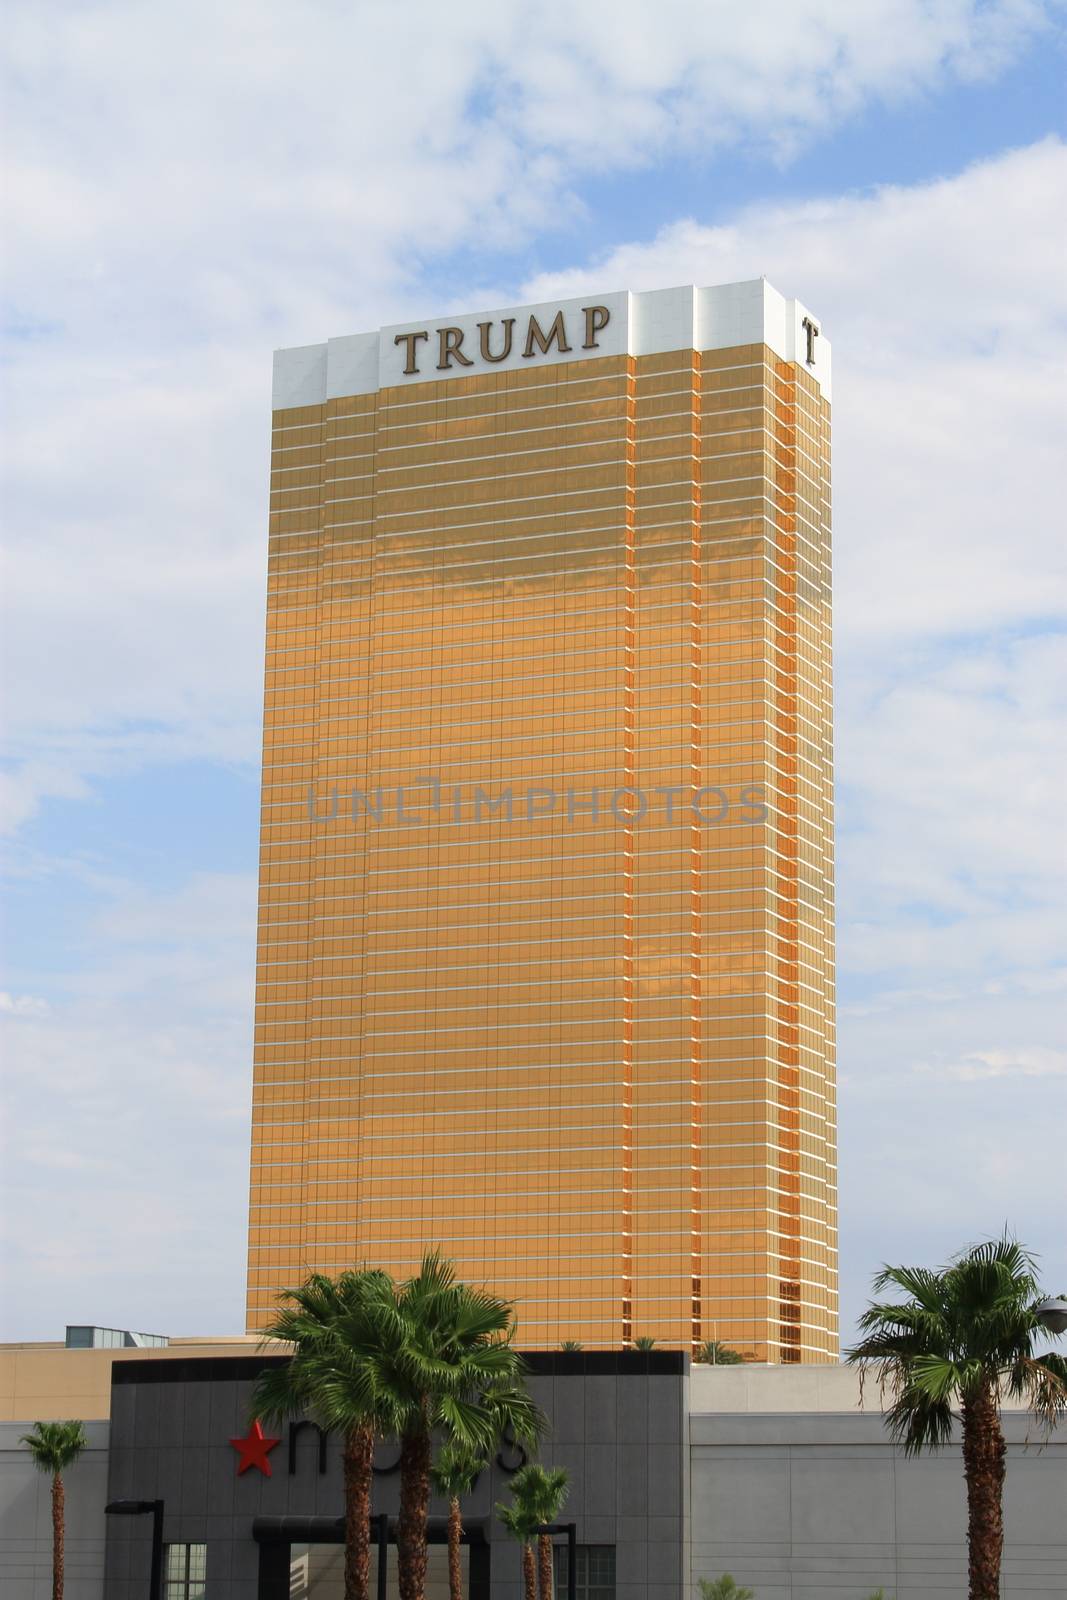 Las Vegas - Trump Hotel by Ffooter